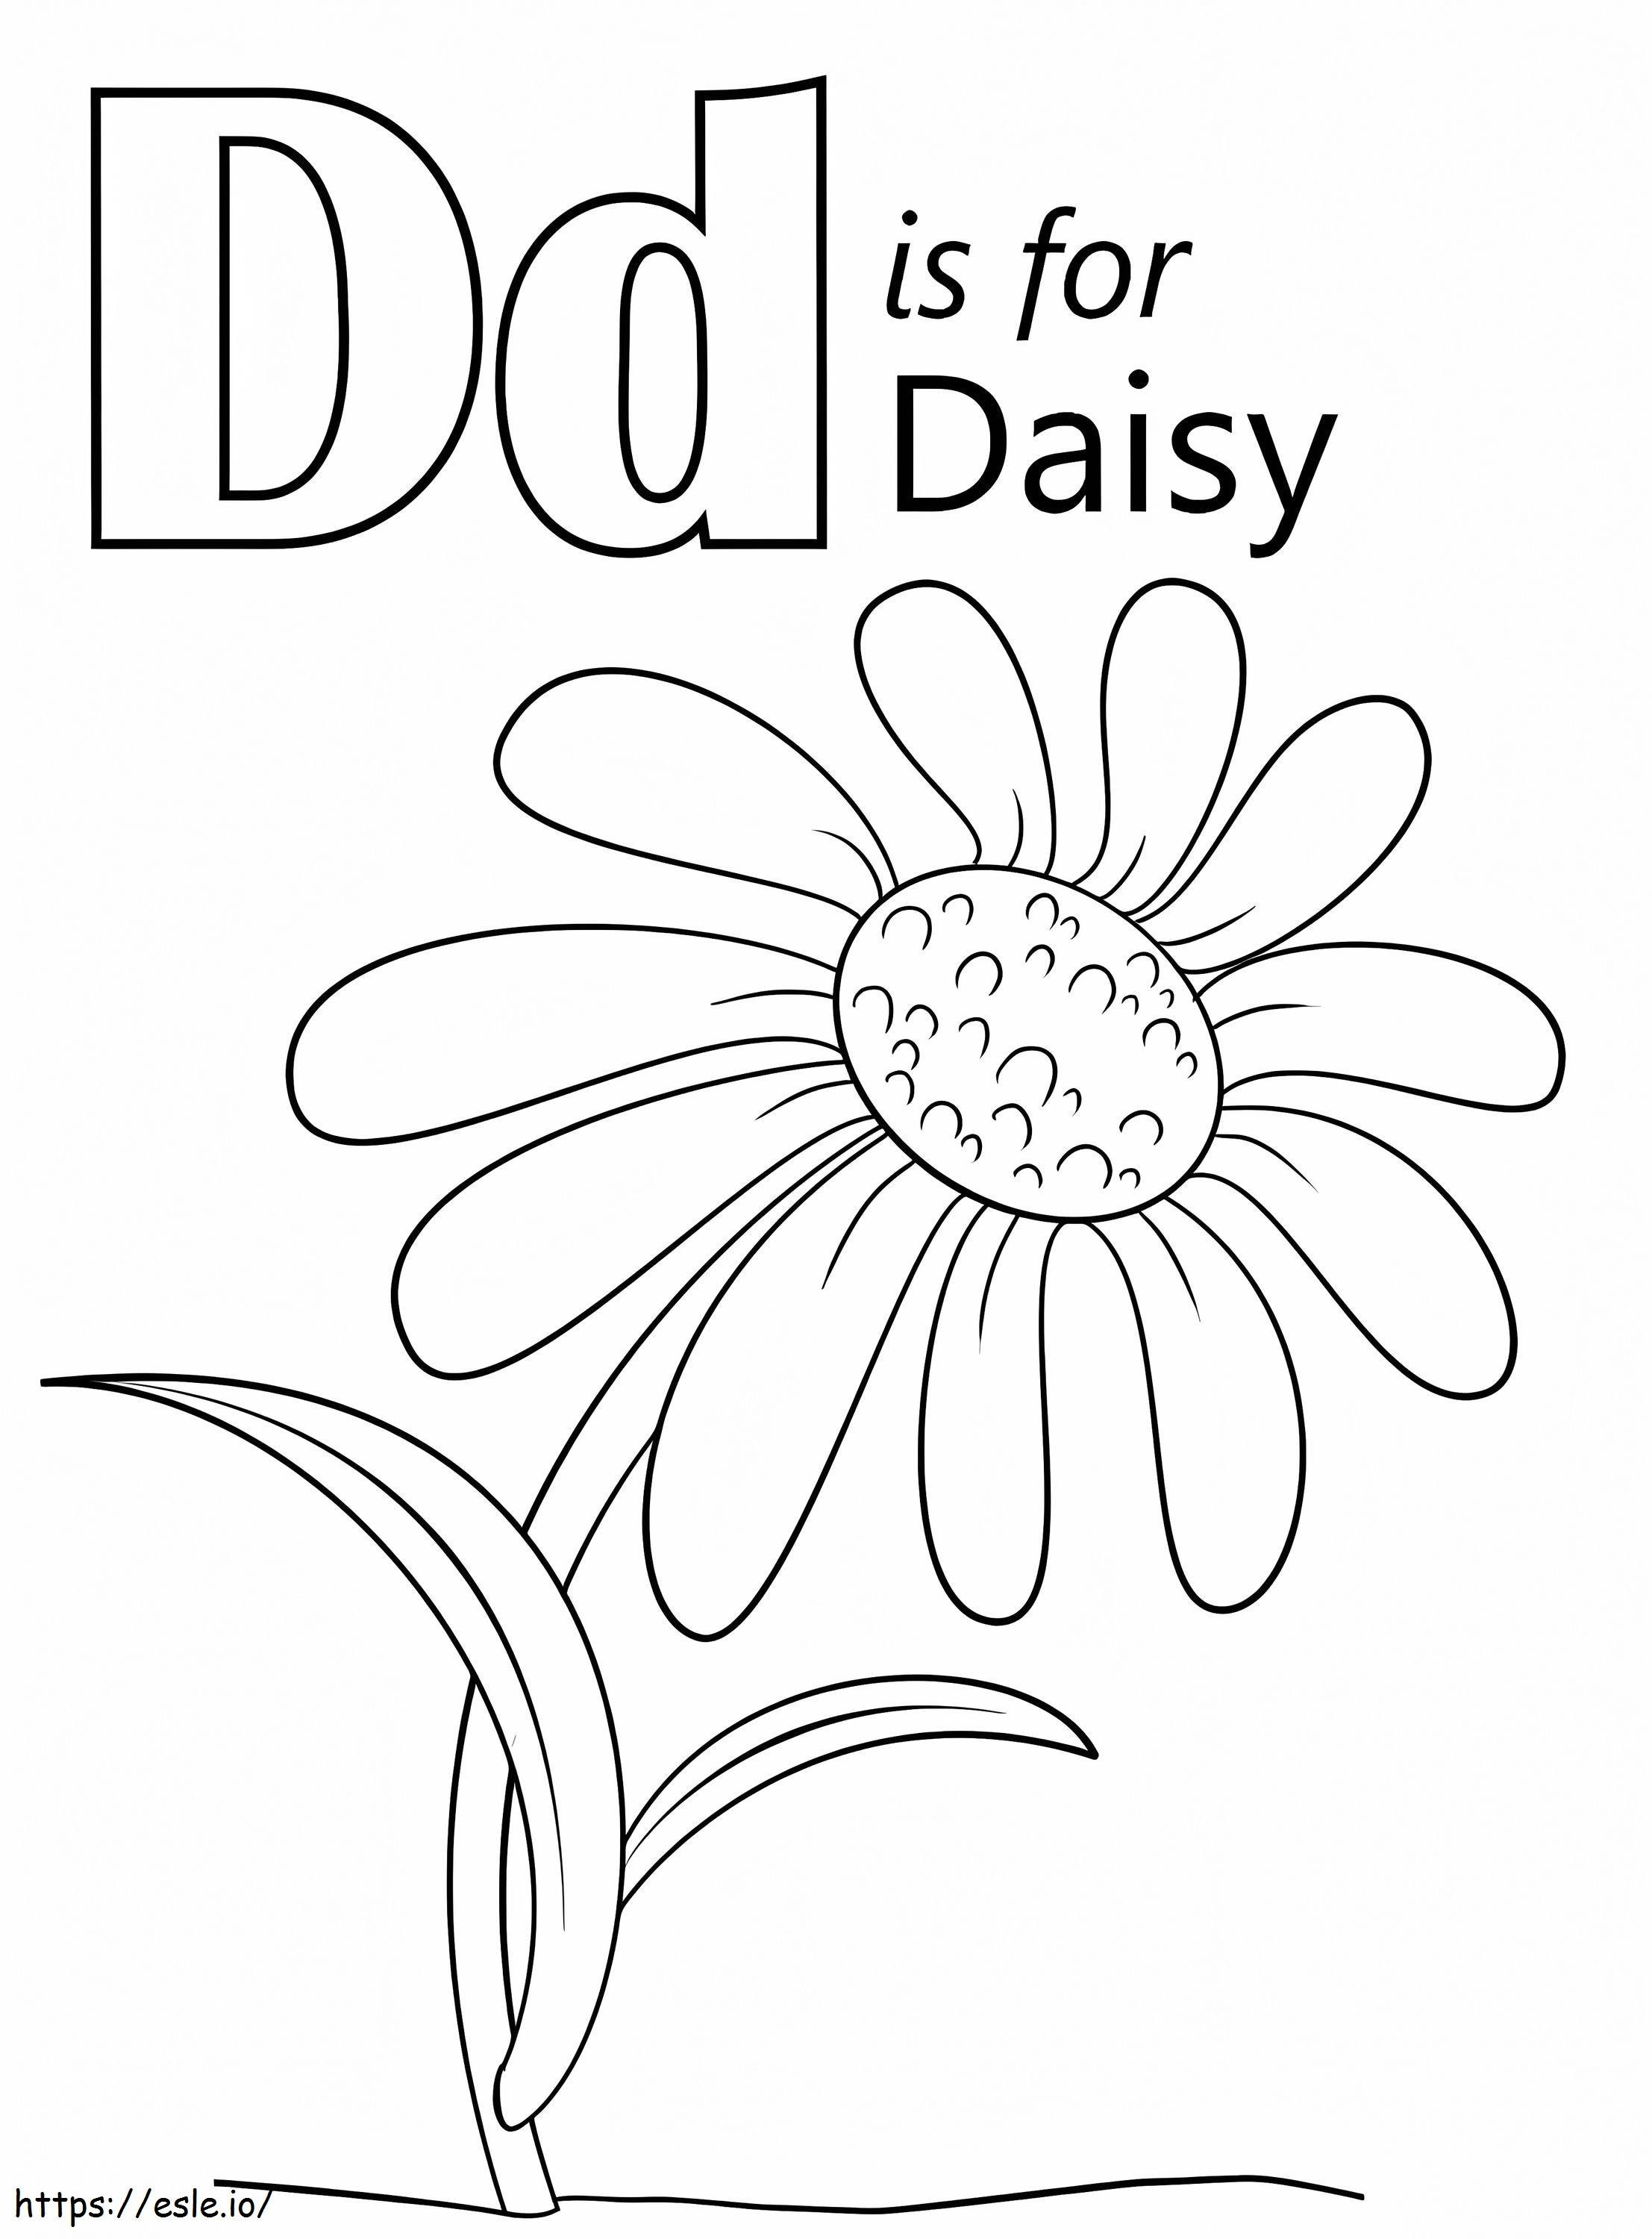 Daisy litera D de colorat